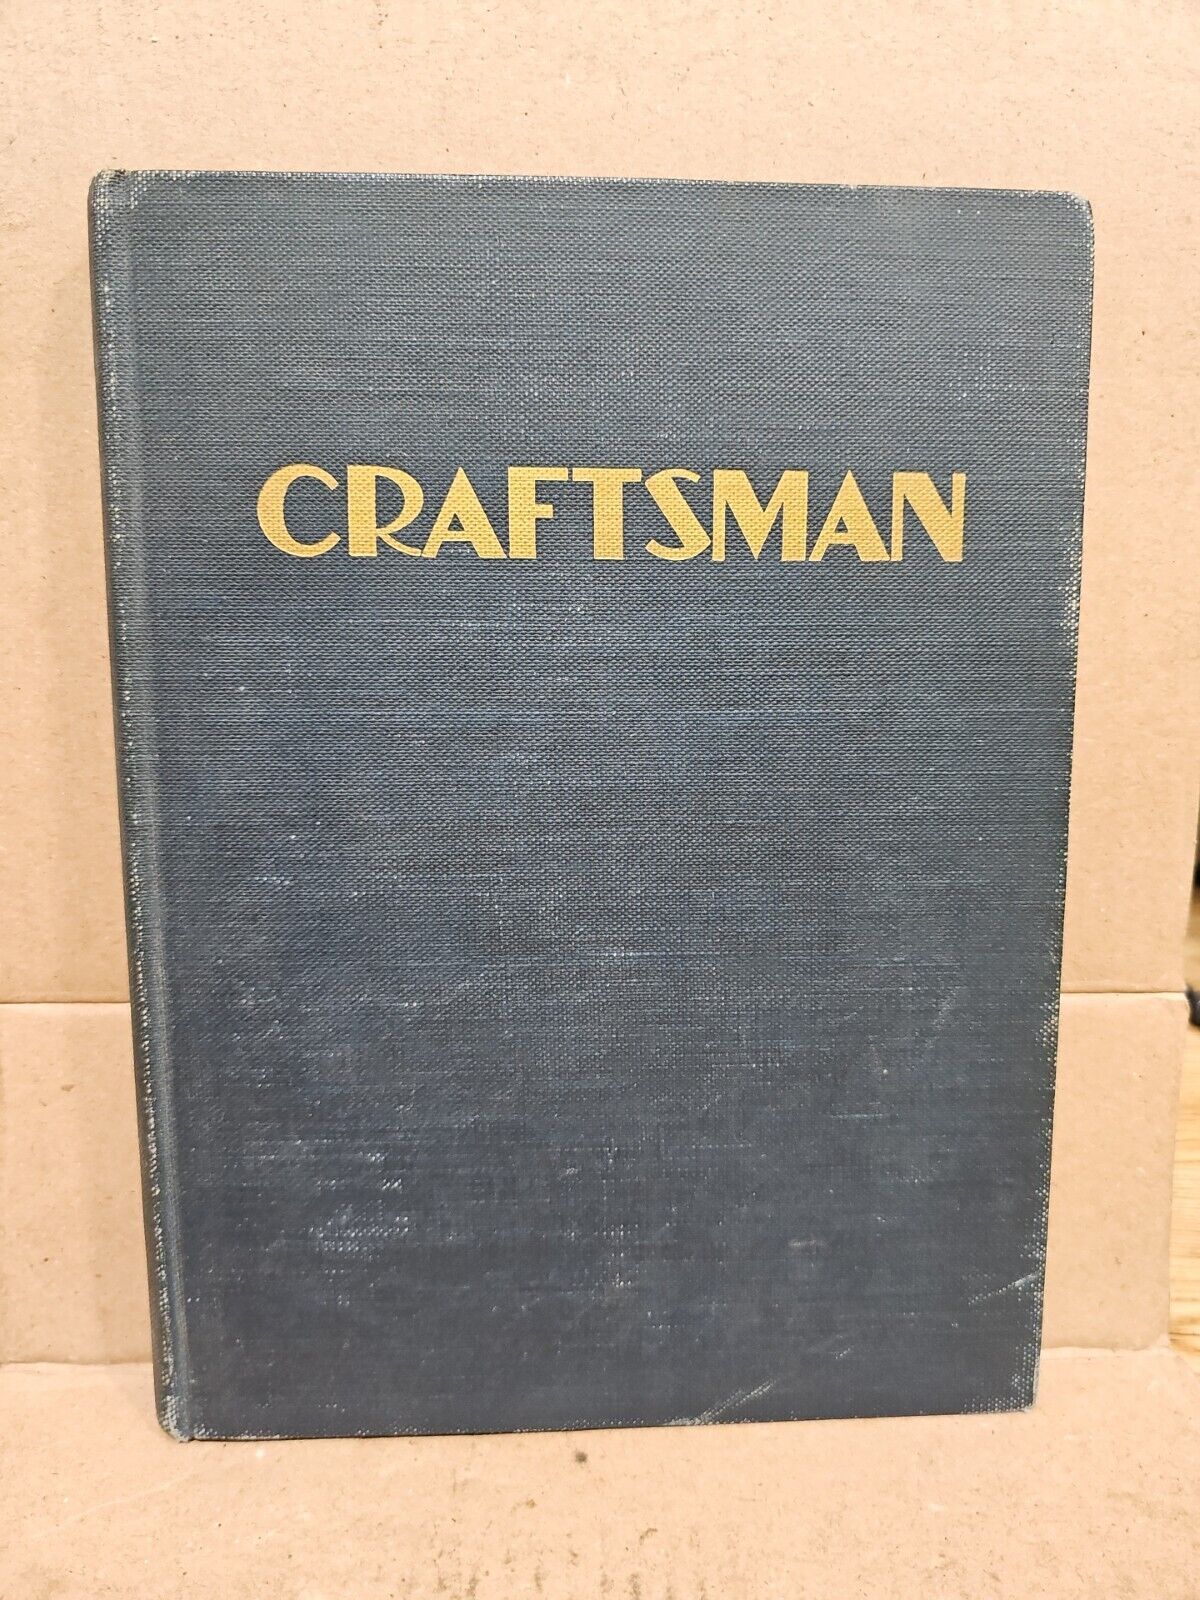 1938 Craftsman Yearbook,Tilden Technical High School,Chicago,Illinois